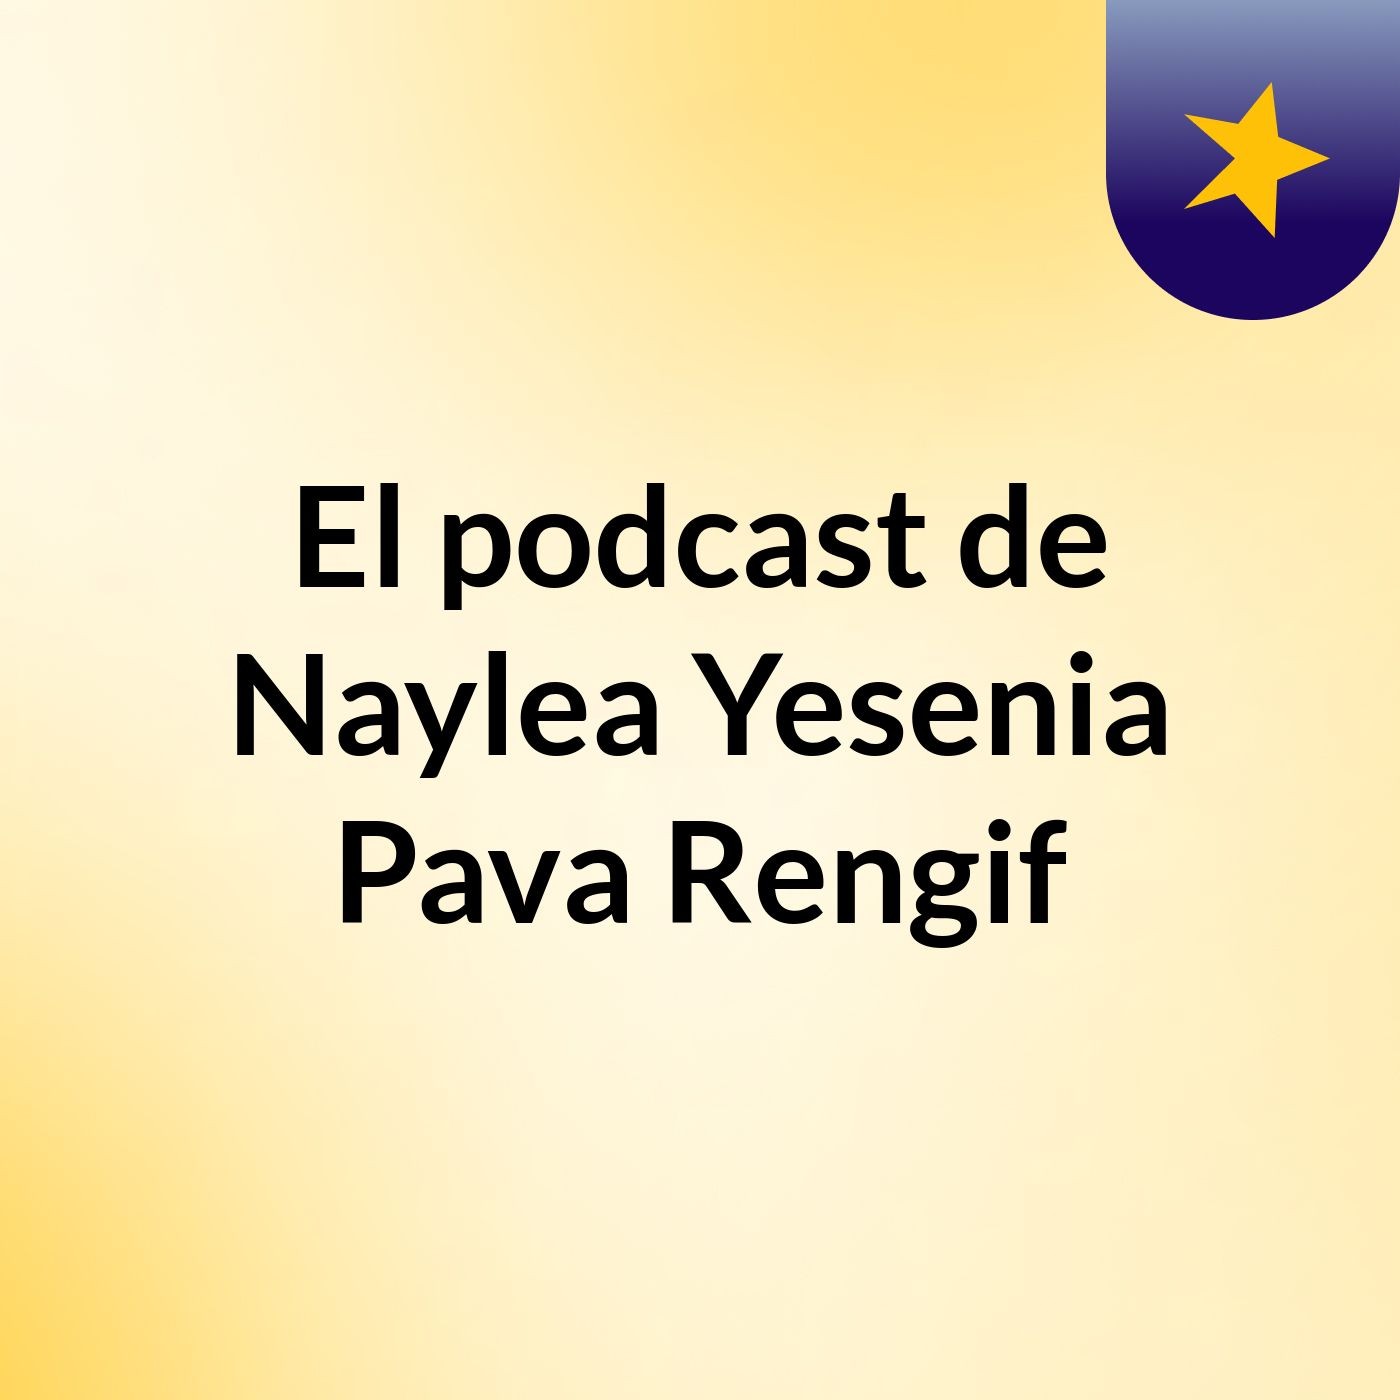 Episodio 5 - El podcast de Naylea Yesenia Pava Rengif